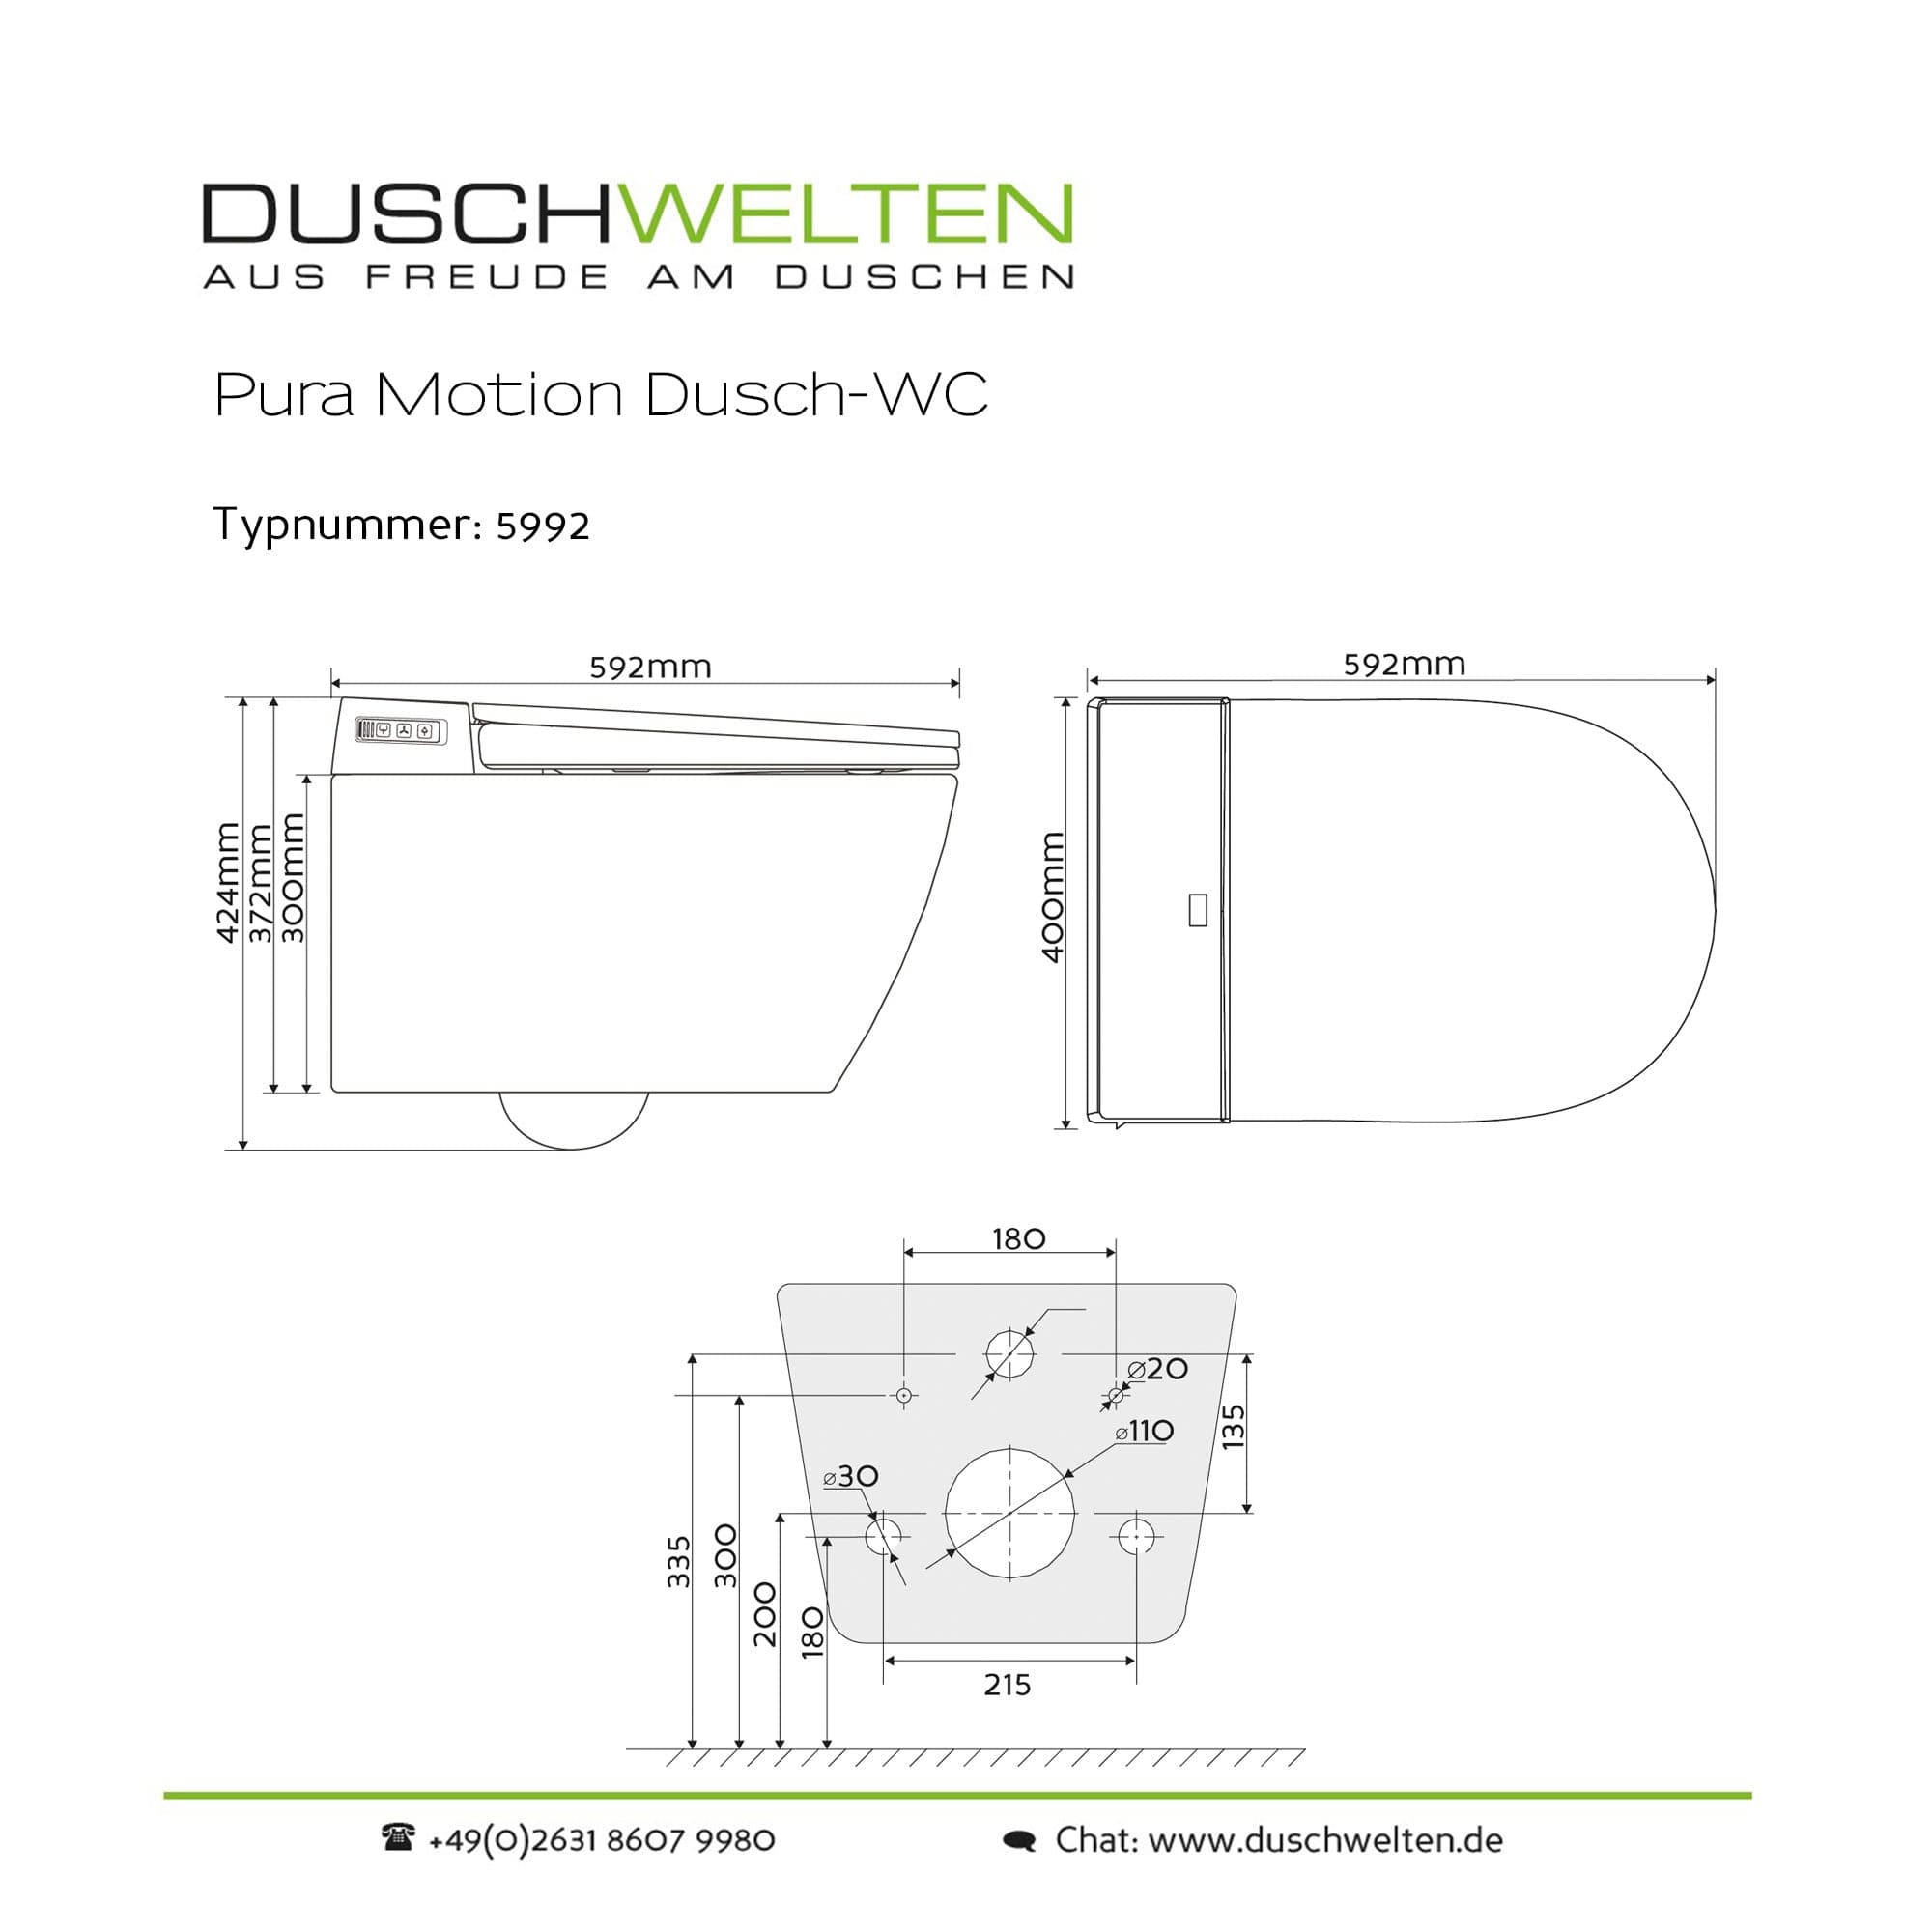 PuraMotion Dusch-WC